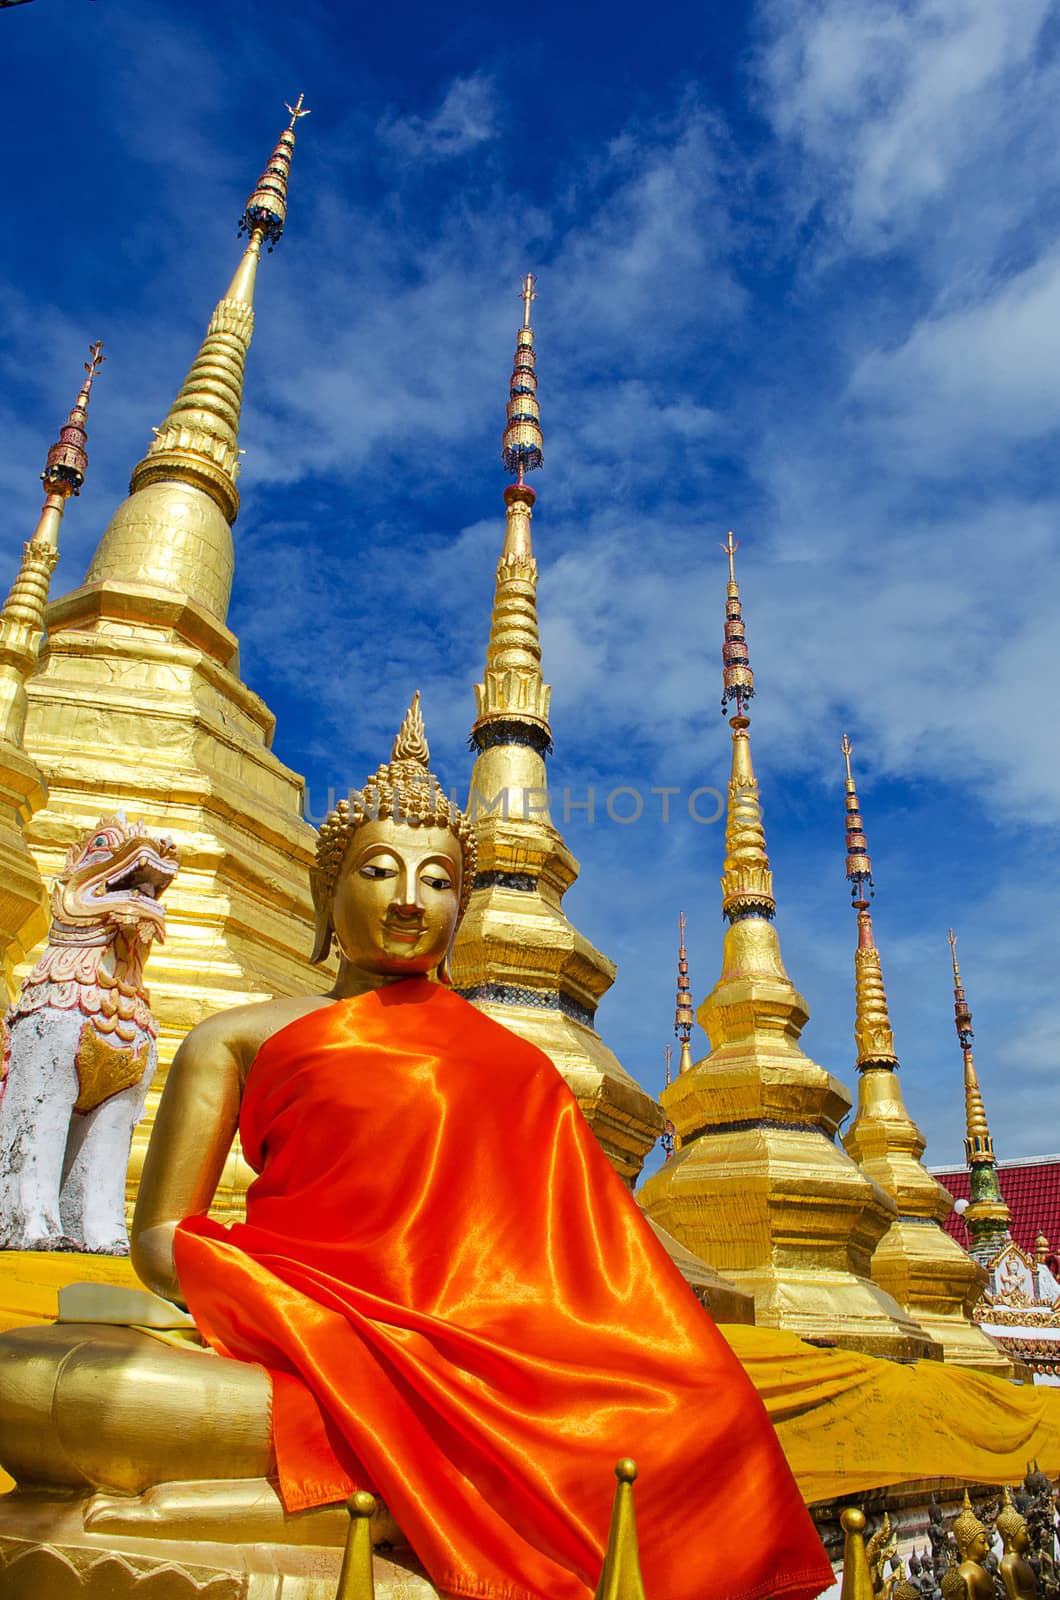 Gloden Seated Buddha Image with Golden Pagoda by kobfujar